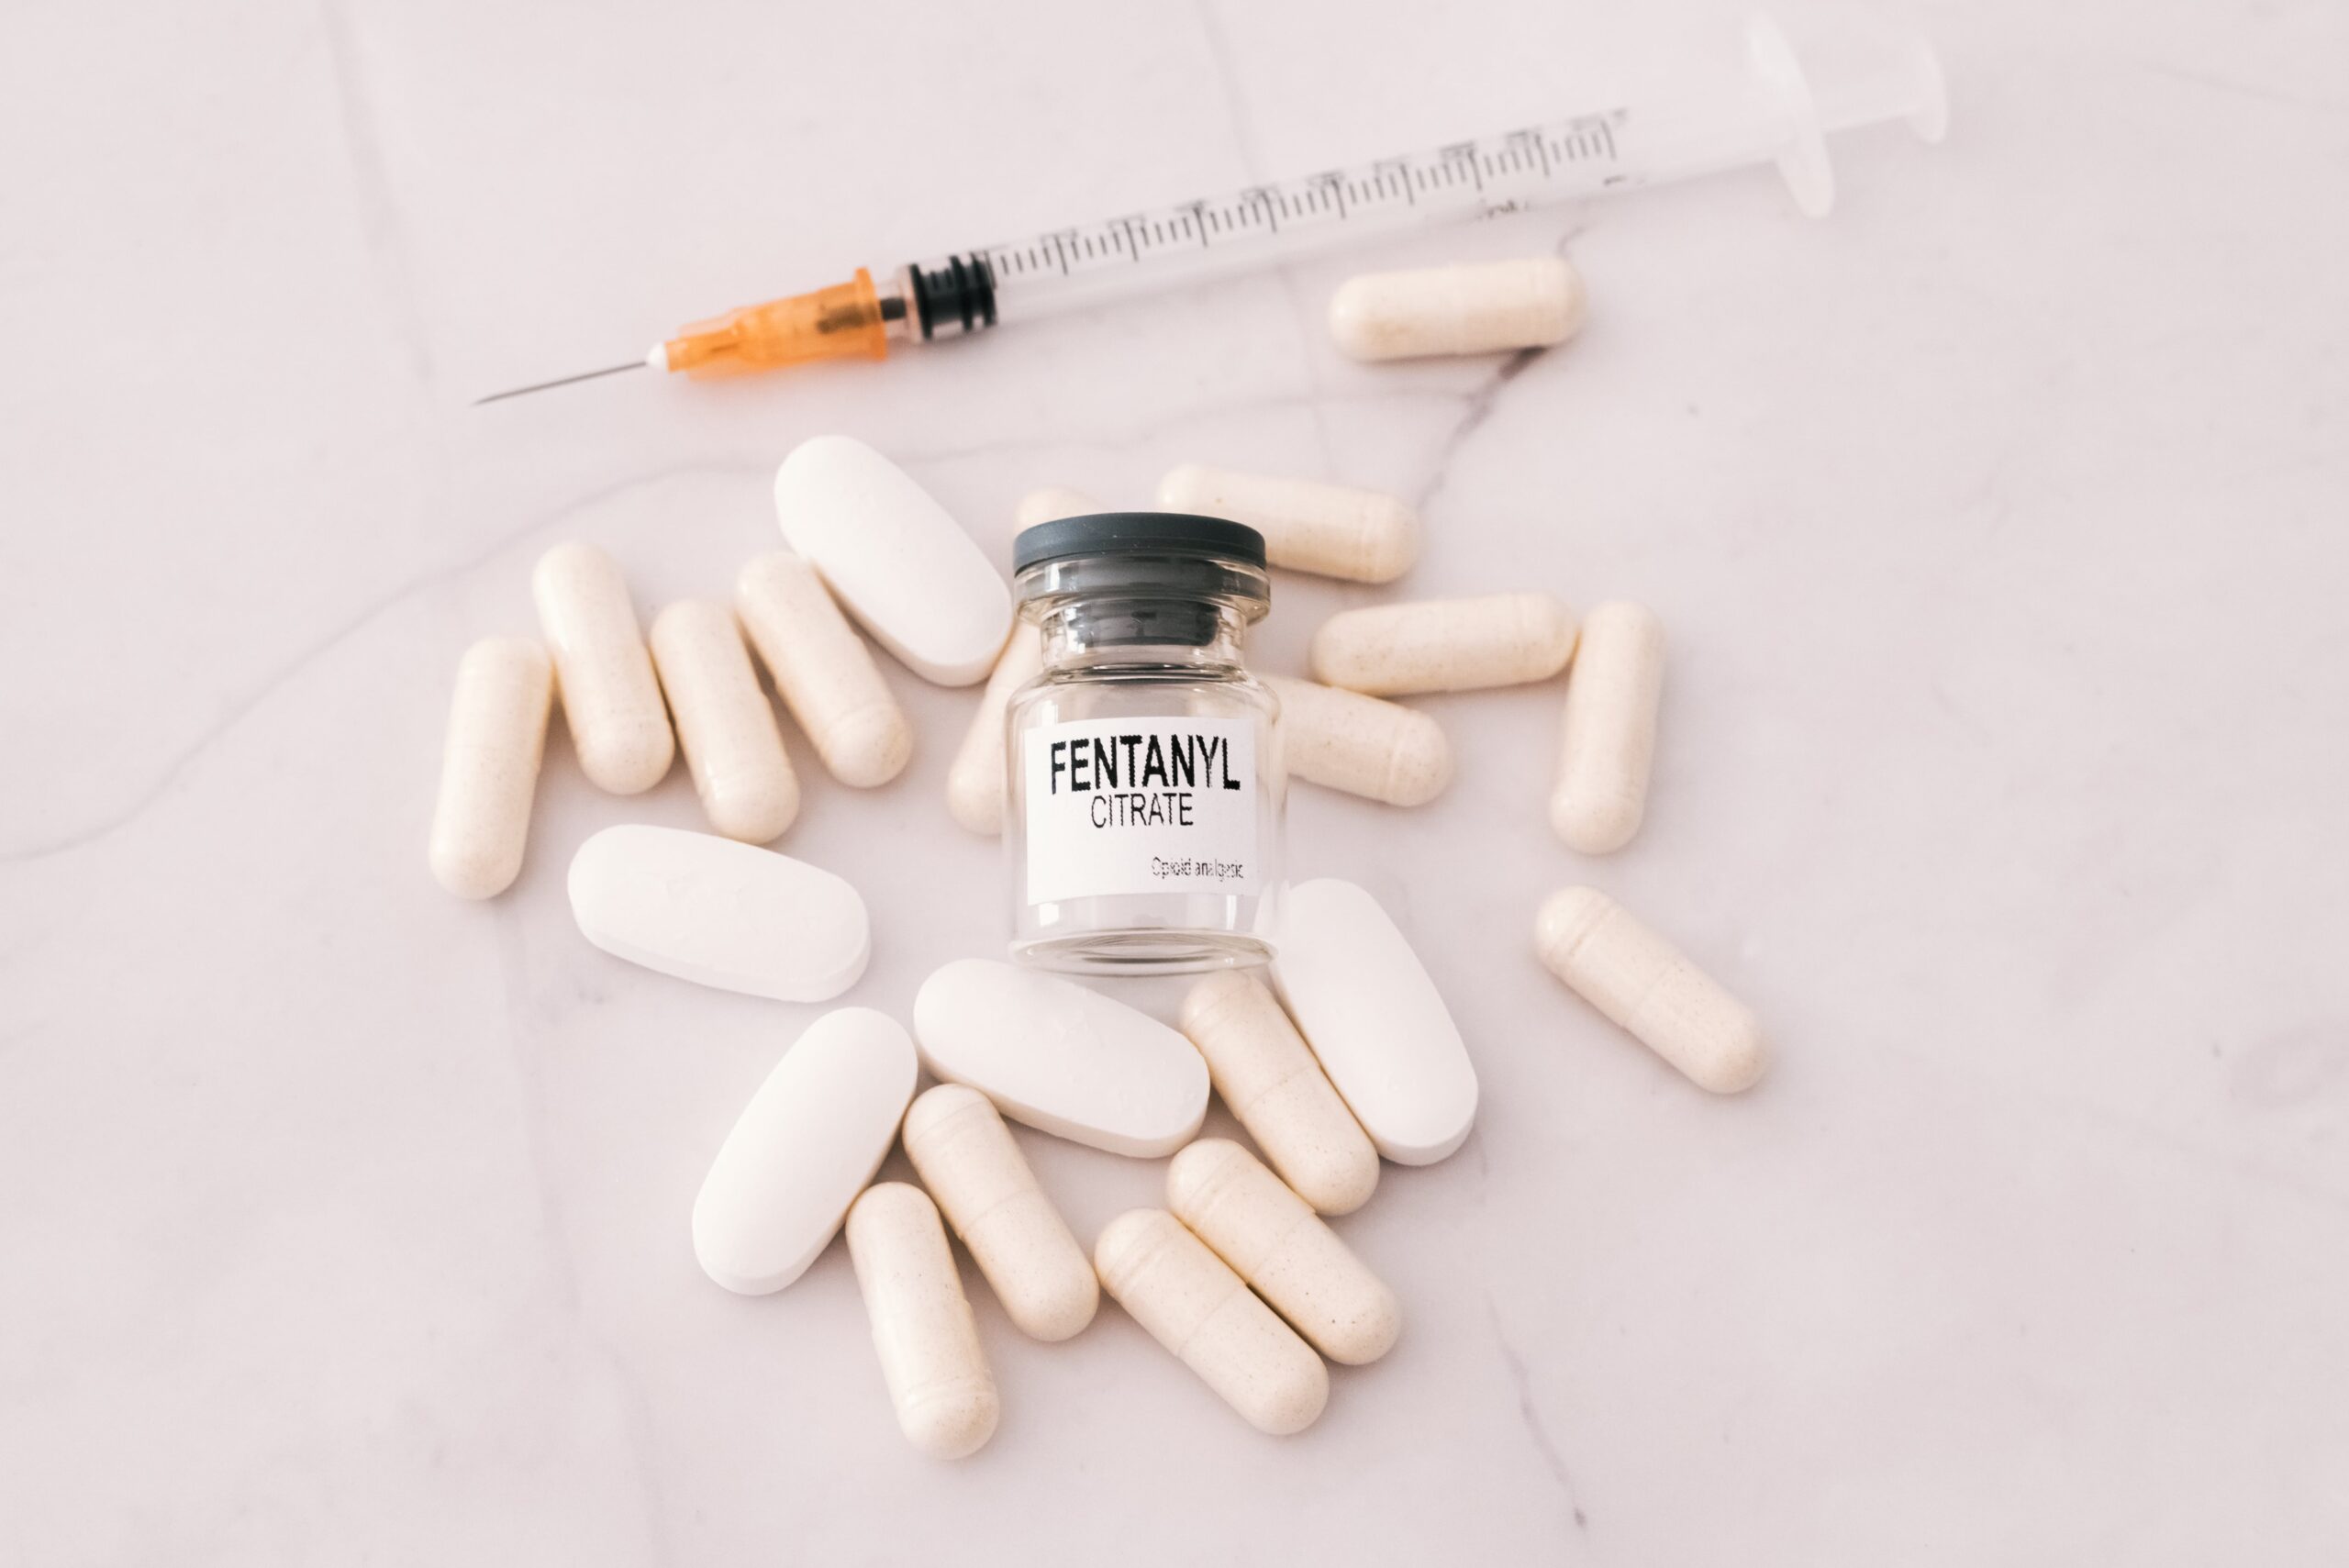 How to Prevent Fentanyl Overdose